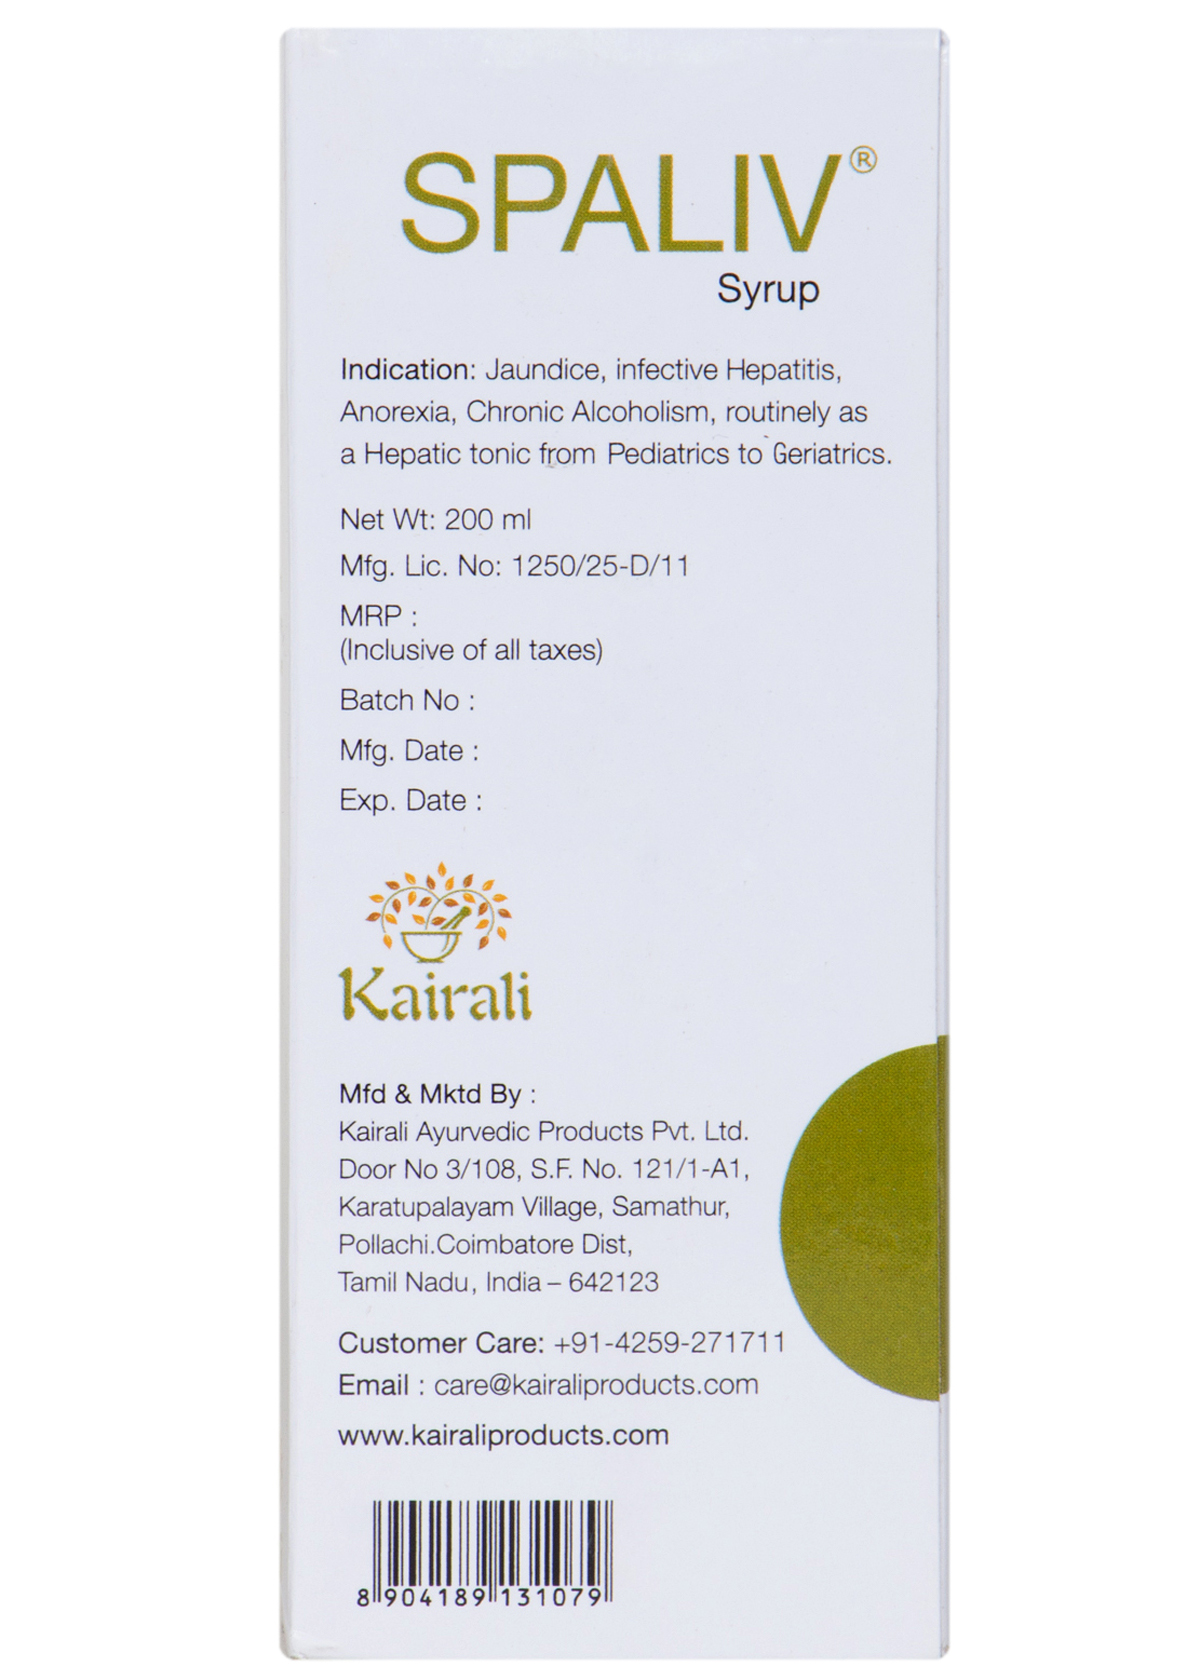 Buy Kairali Spaliv Syrup at Best Price Online